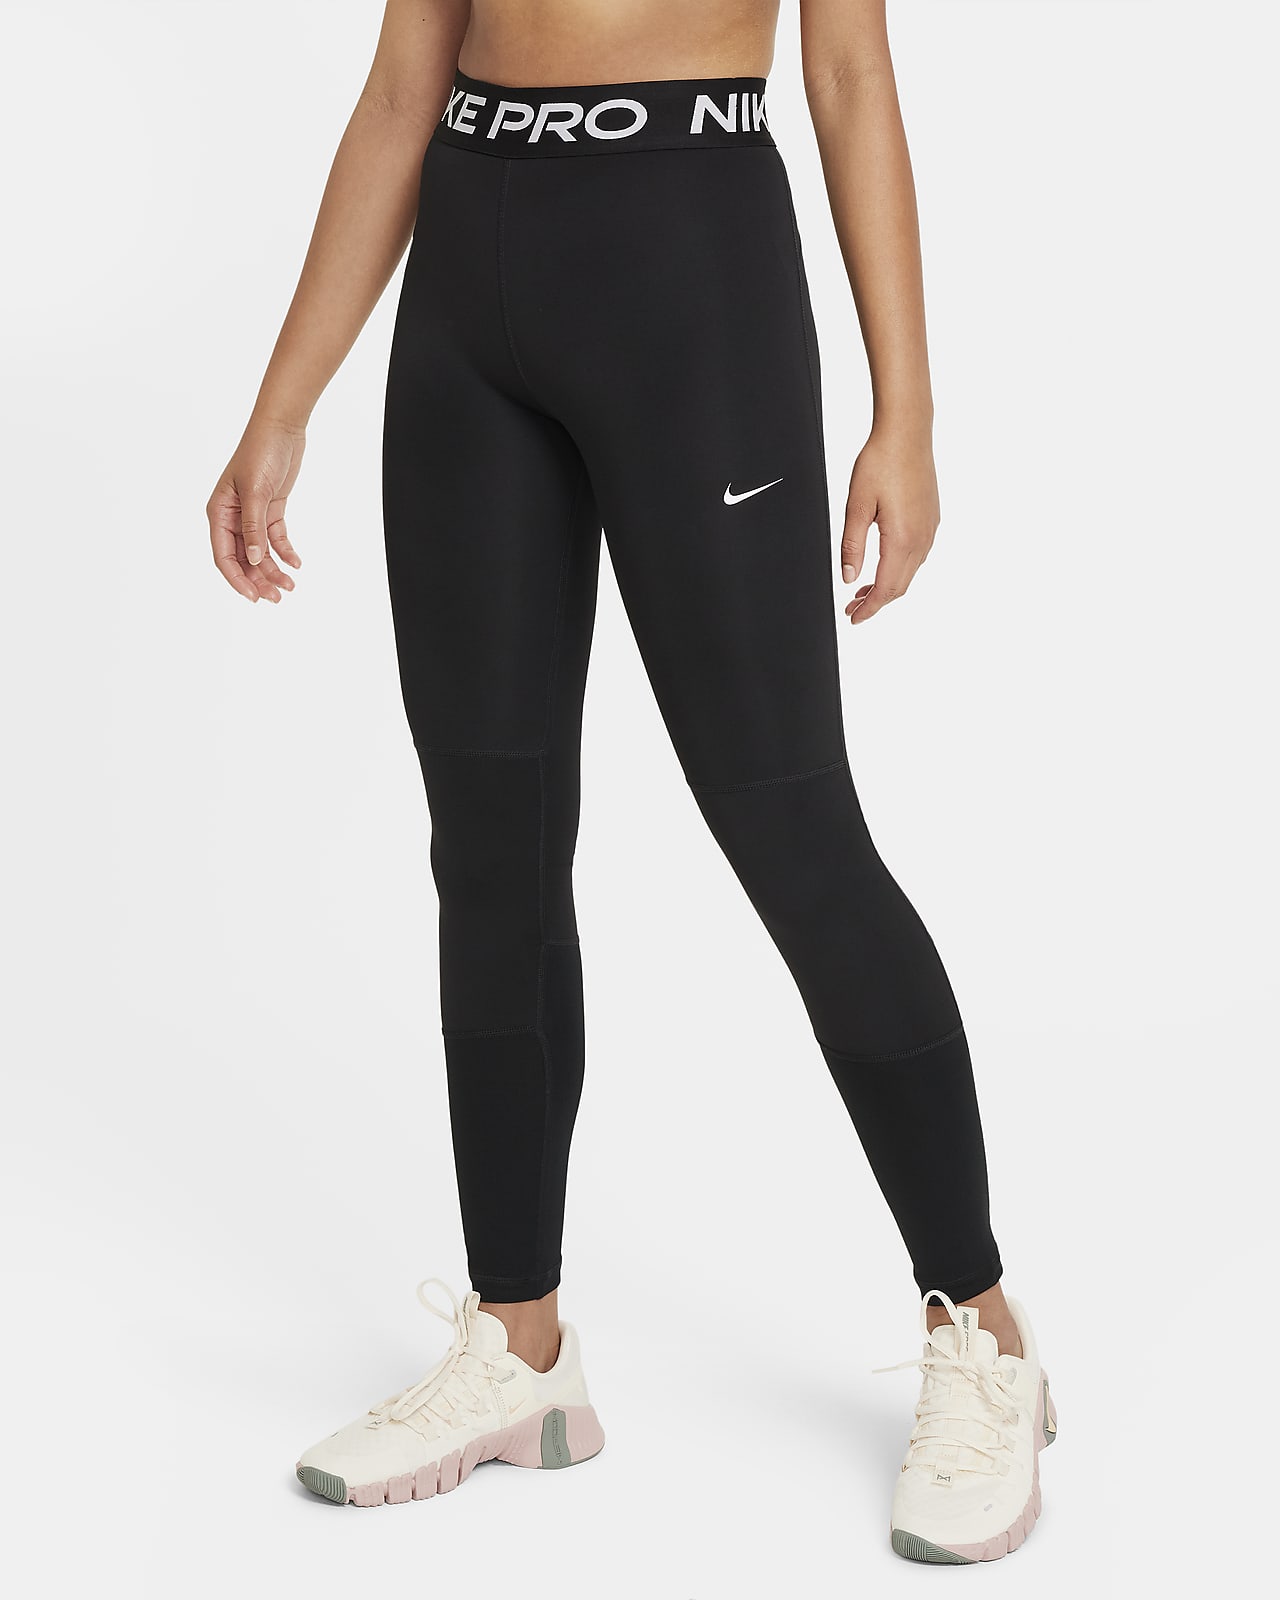 Nike Pro Girls Training Capri Leggings BlackWhite XL  Amazonin  Clothing  Accessories